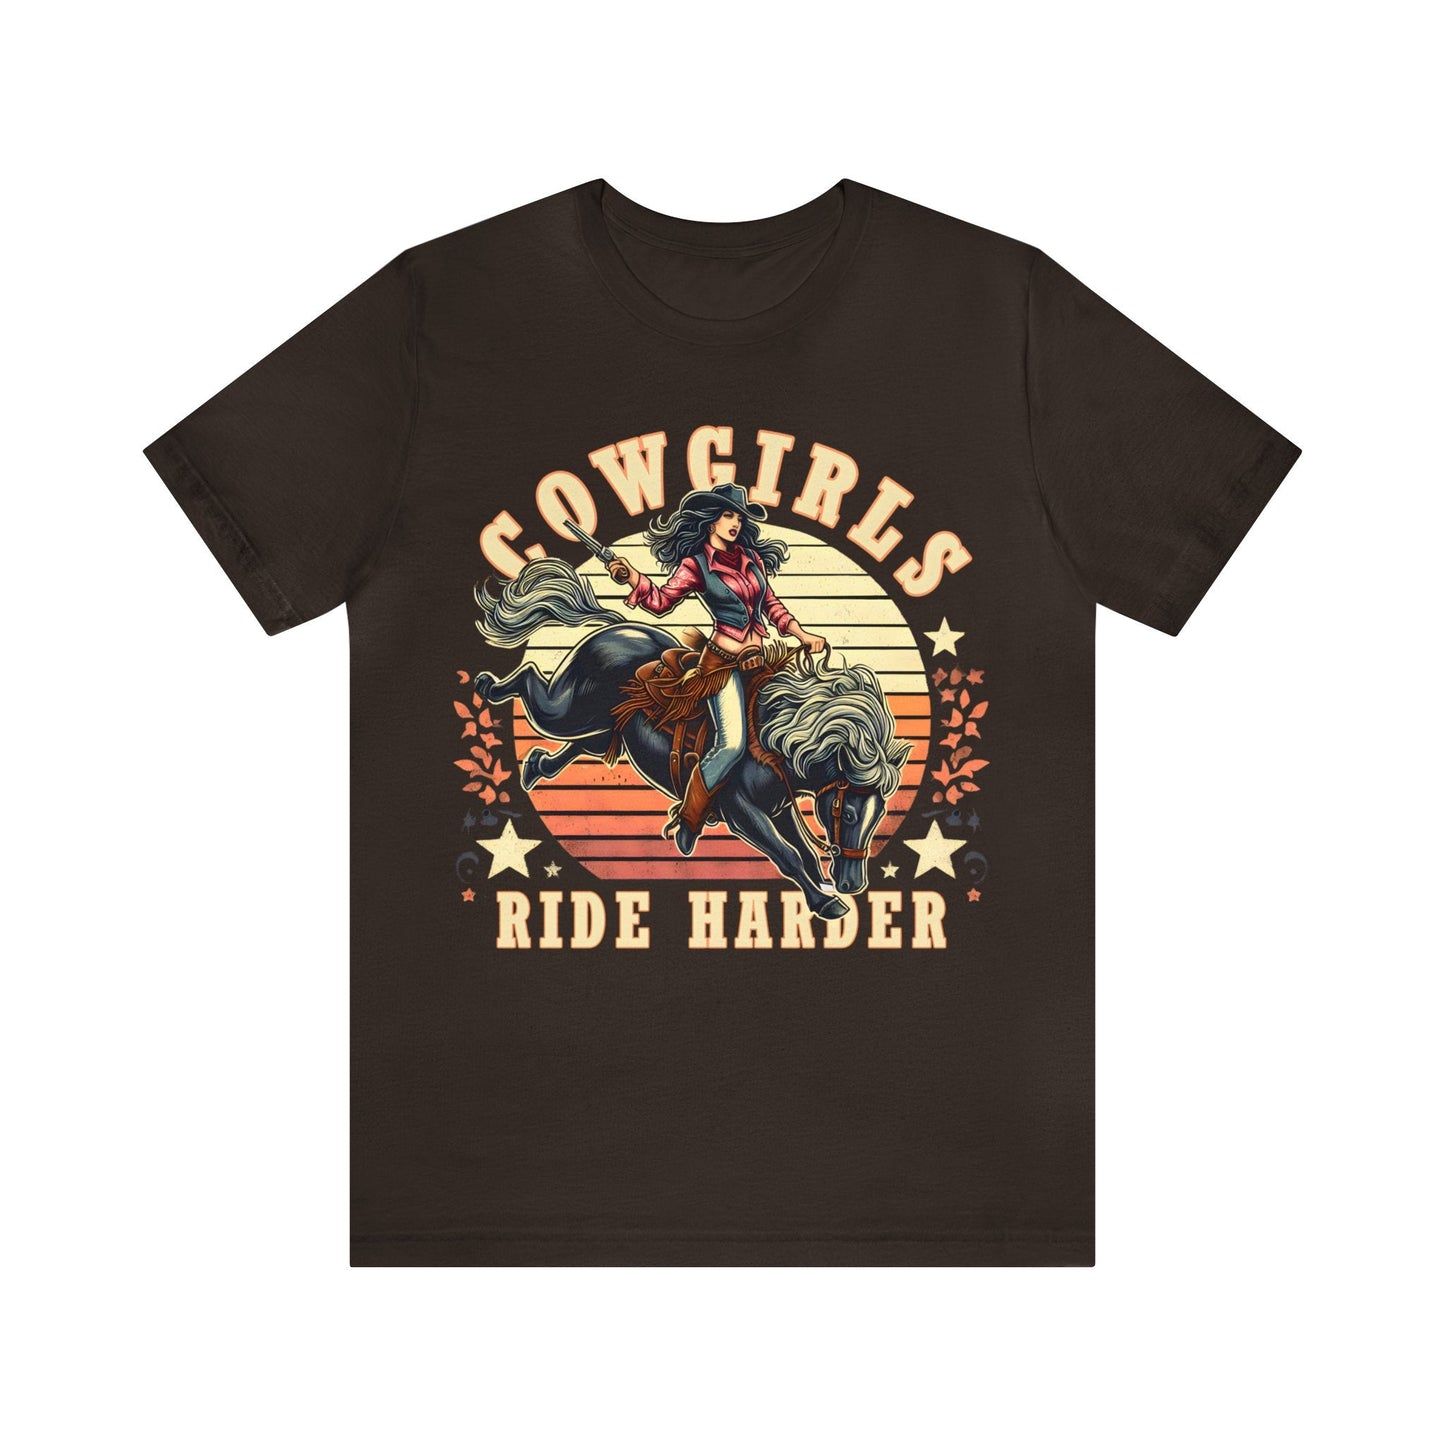 Cowgirls Ride Harder Shirt